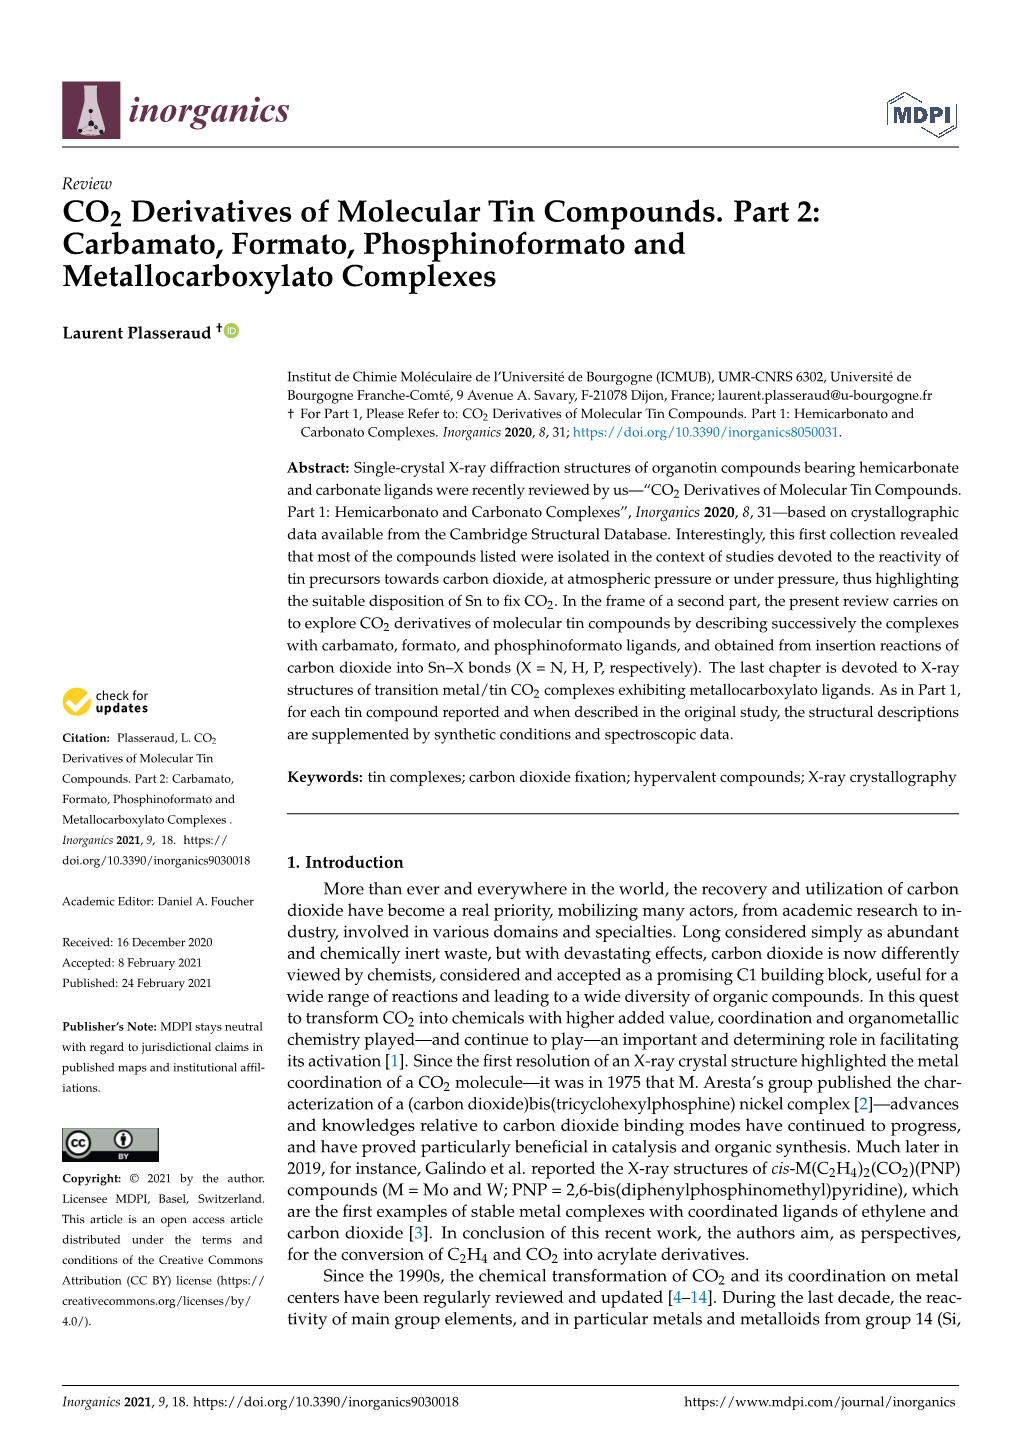 CO2 Derivatives of Molecular Tin Compounds. Part 2: Carbamato, Formato, Phosphinoformato and Metallocarboxylato Complexes